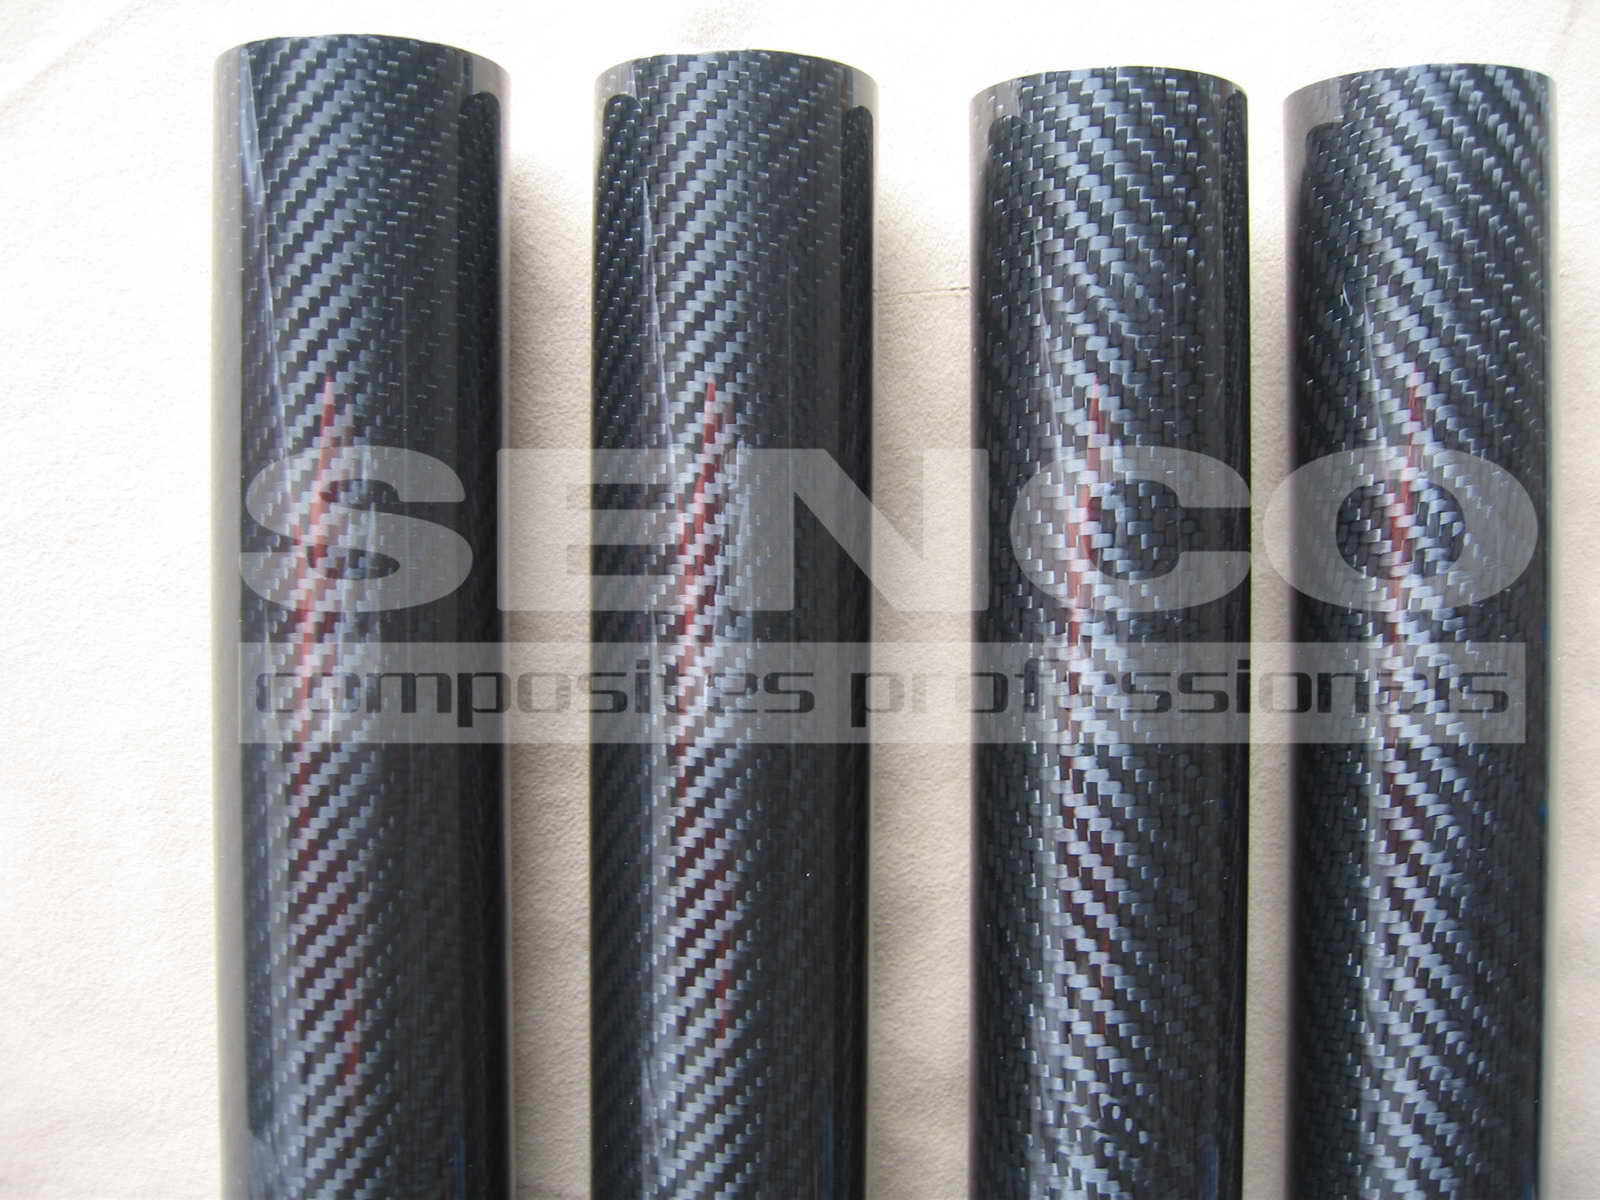 3K wovven carbon fiber tube